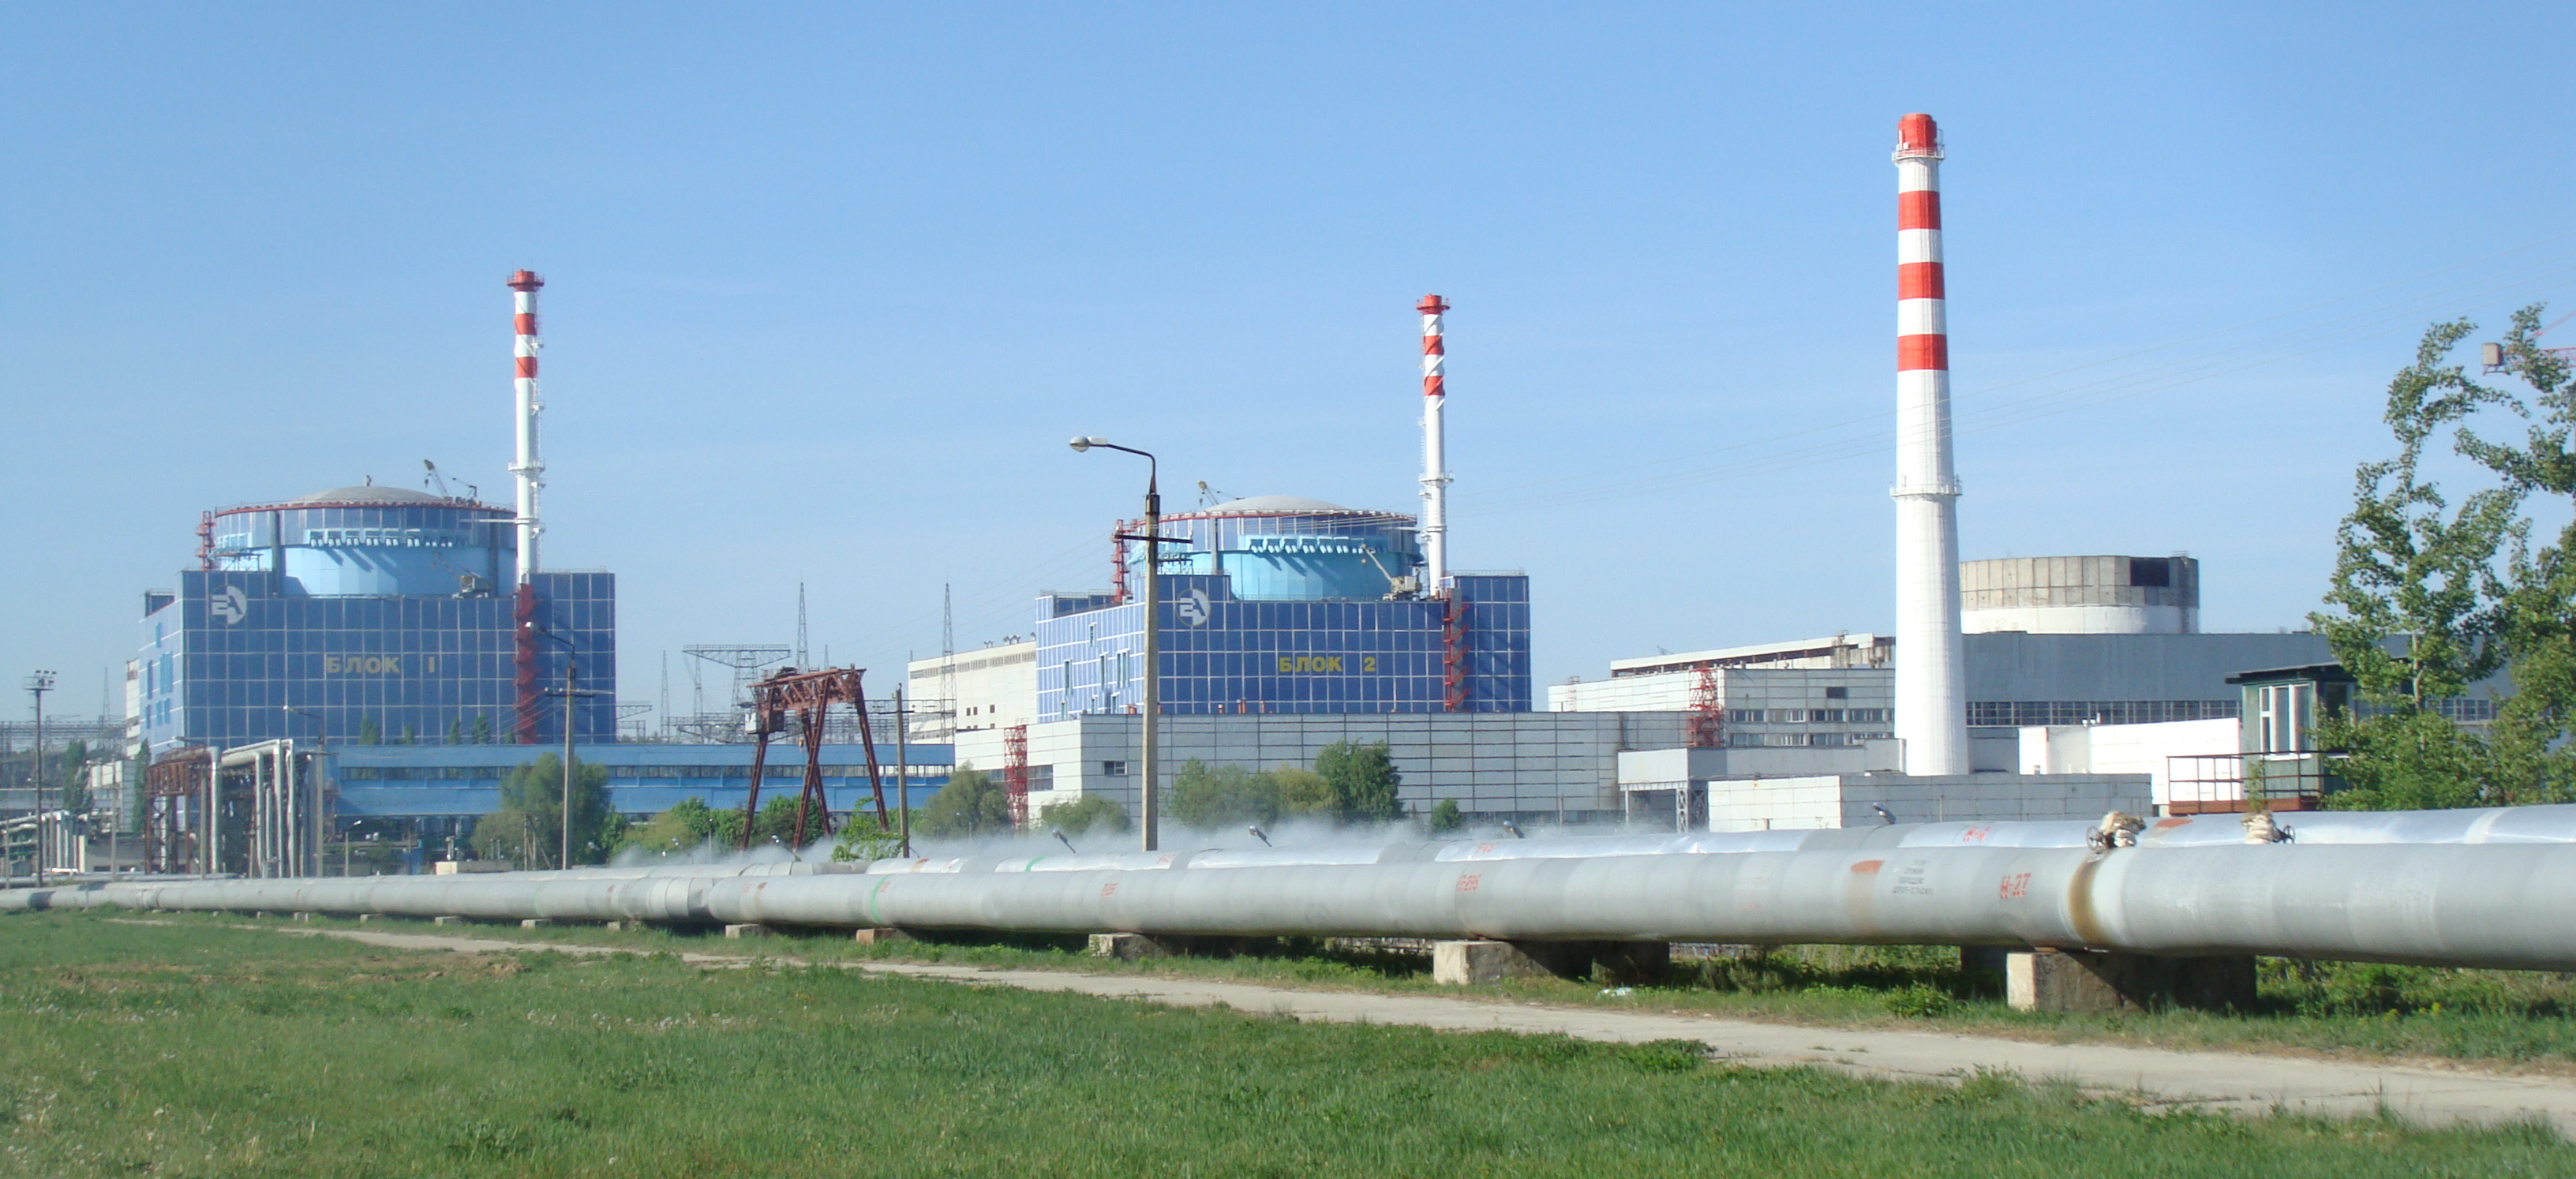 Khmelnitskiy Nuclear Power Plant, 2013 (RLuts - Own work)